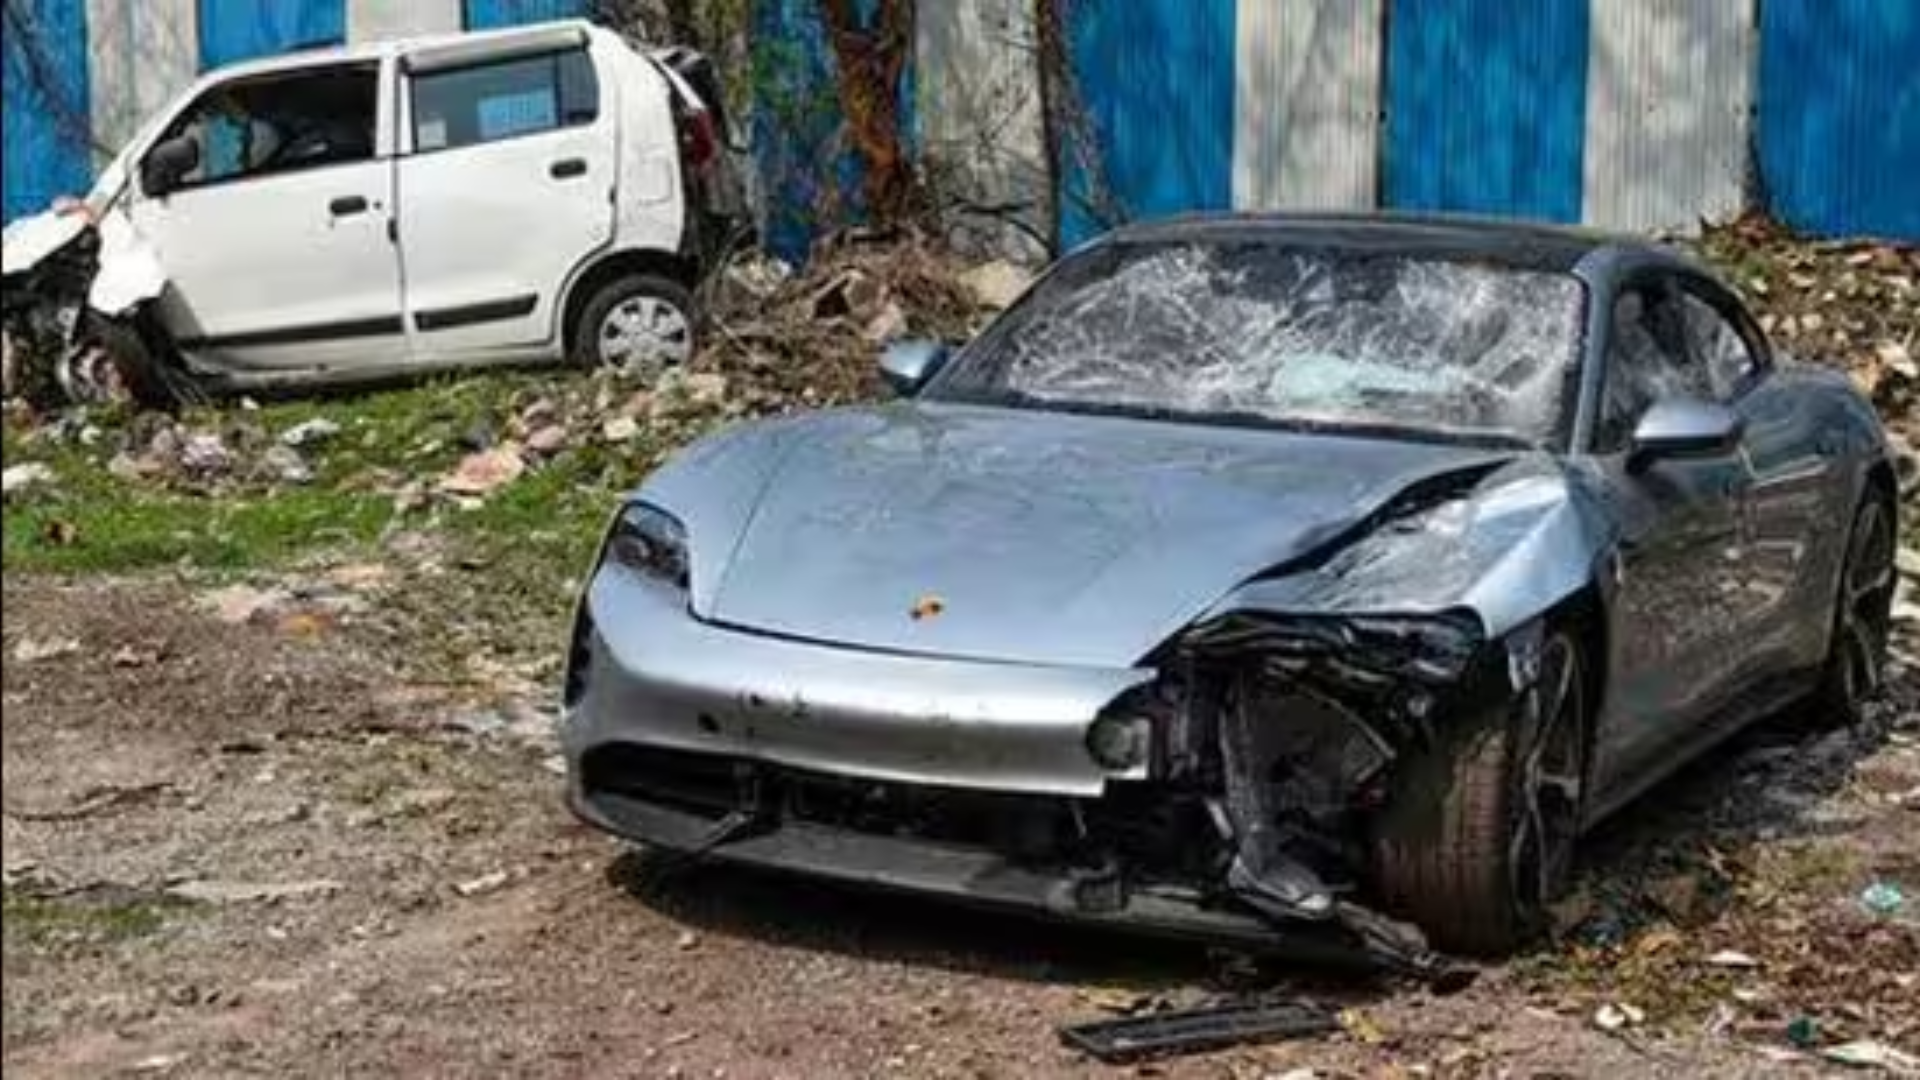 Pune Porsche Crash Case: Parents And Medical Staff Remand Custody Extended For Blood Sample Manipulation